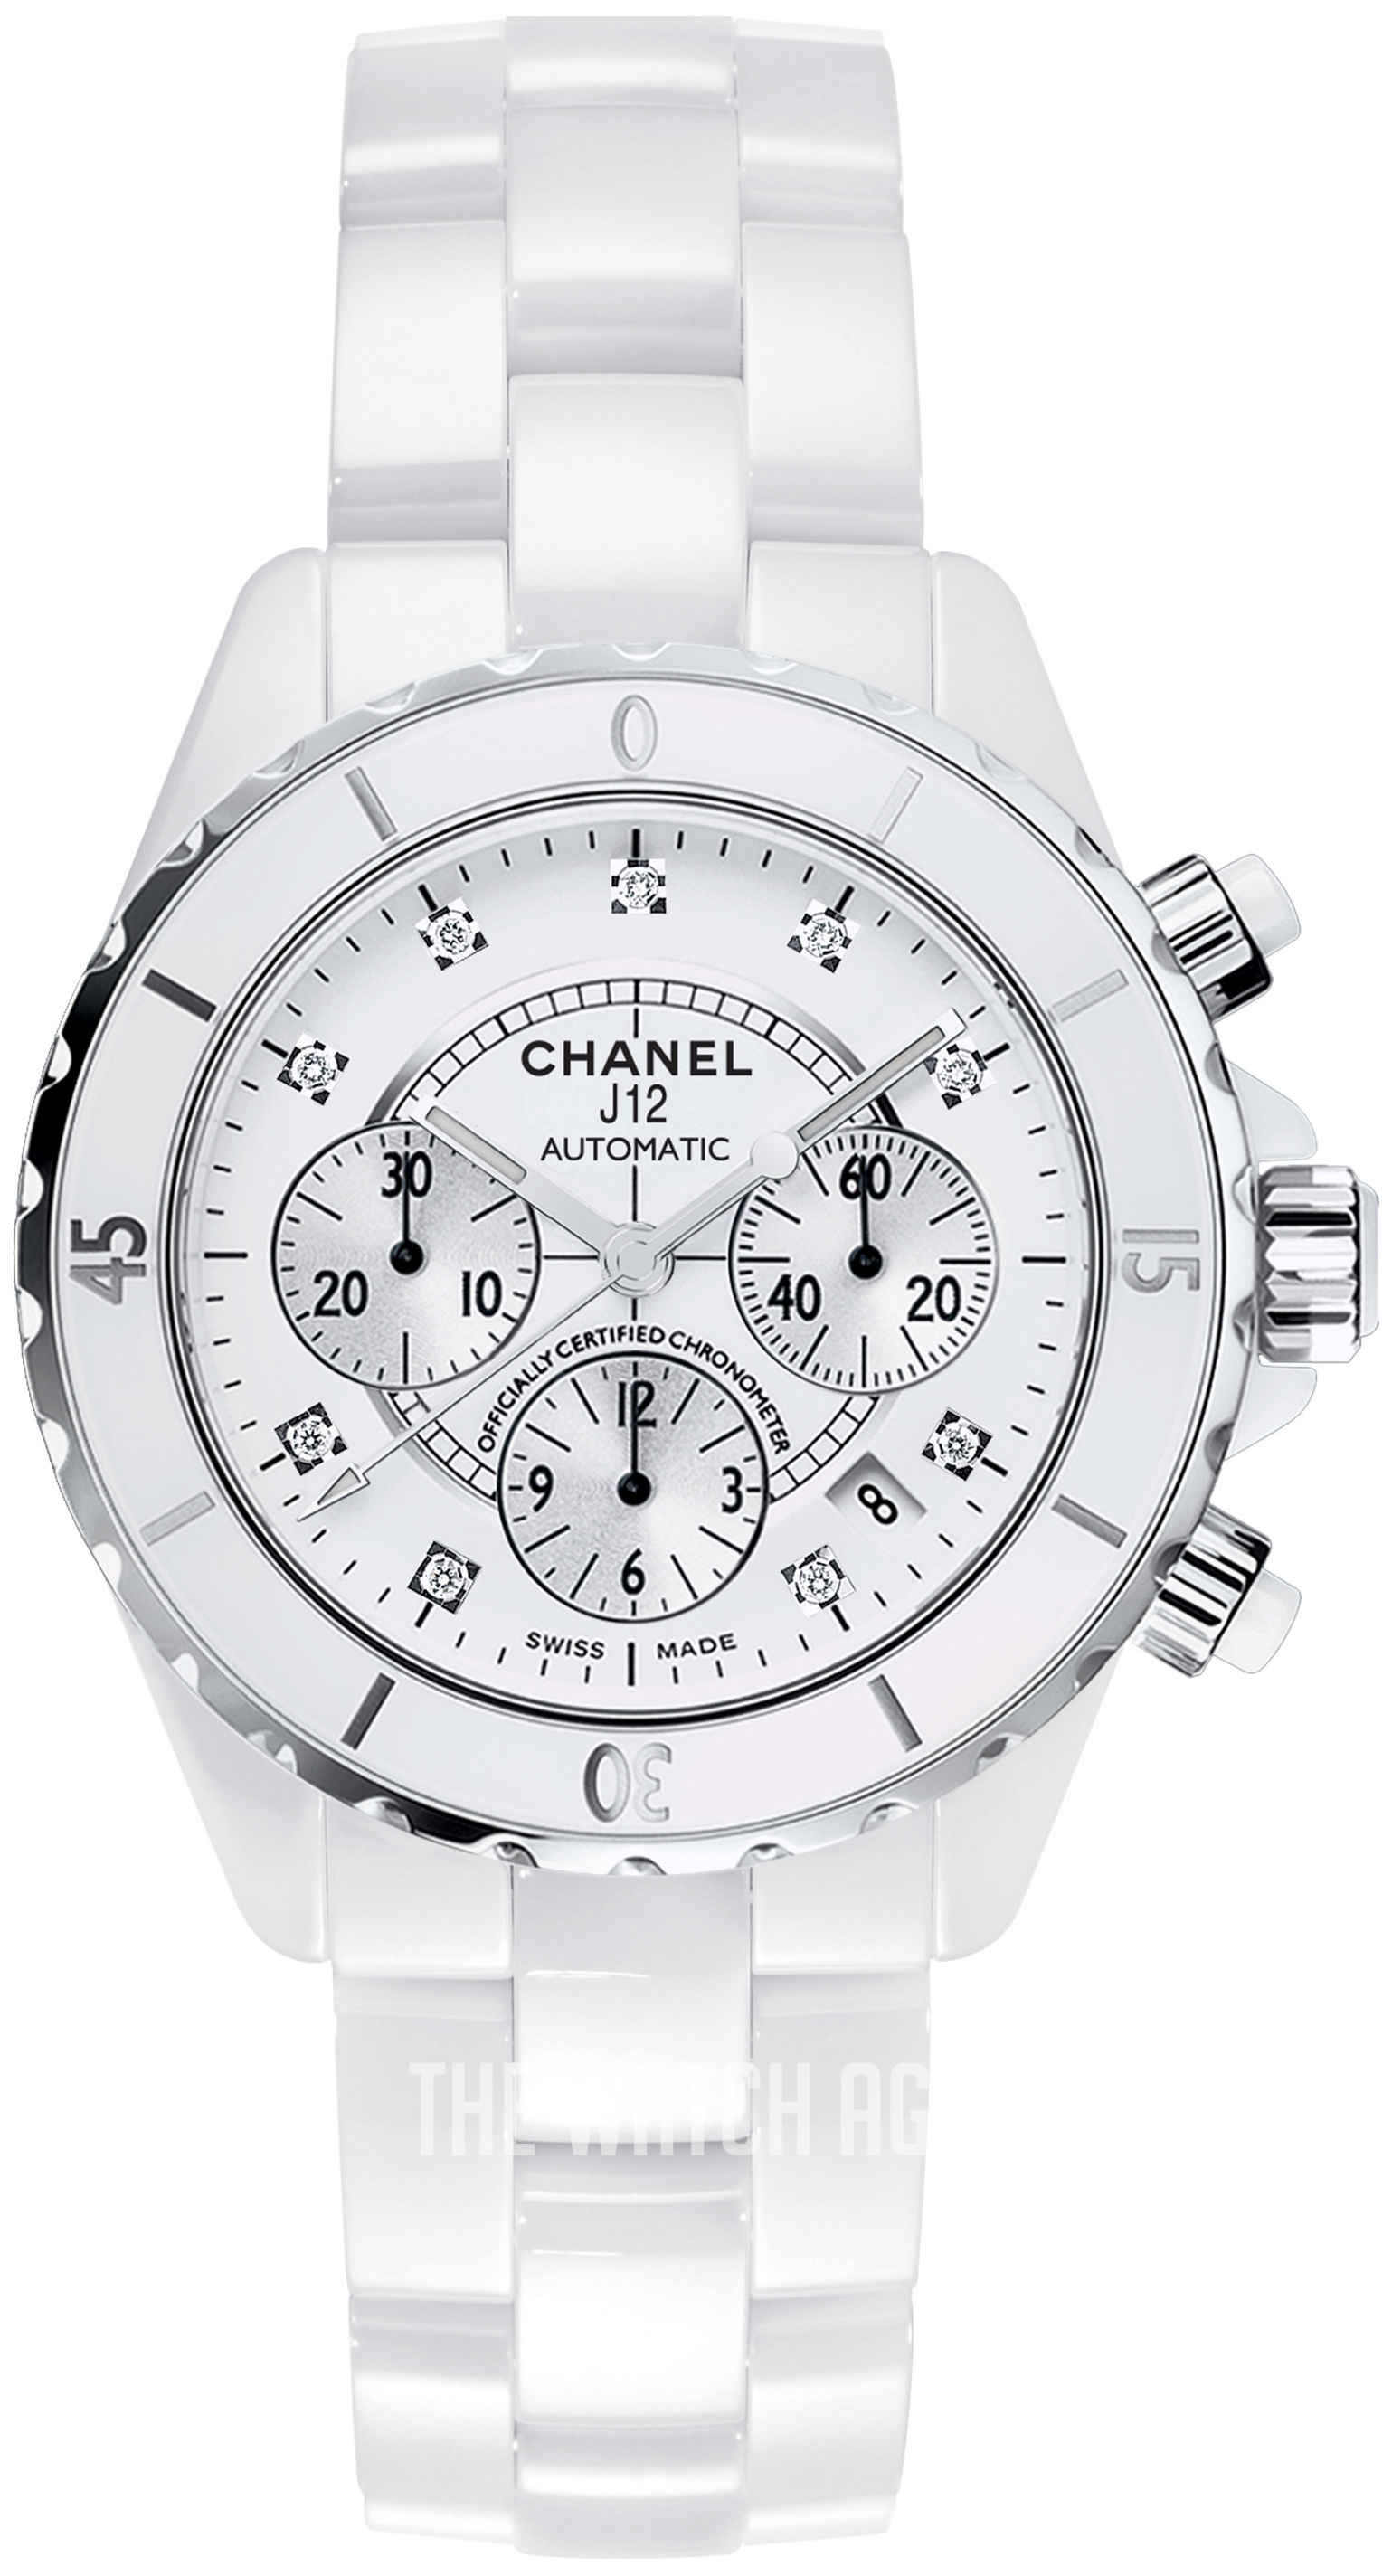 H2009 Chanel J12 Chronograph